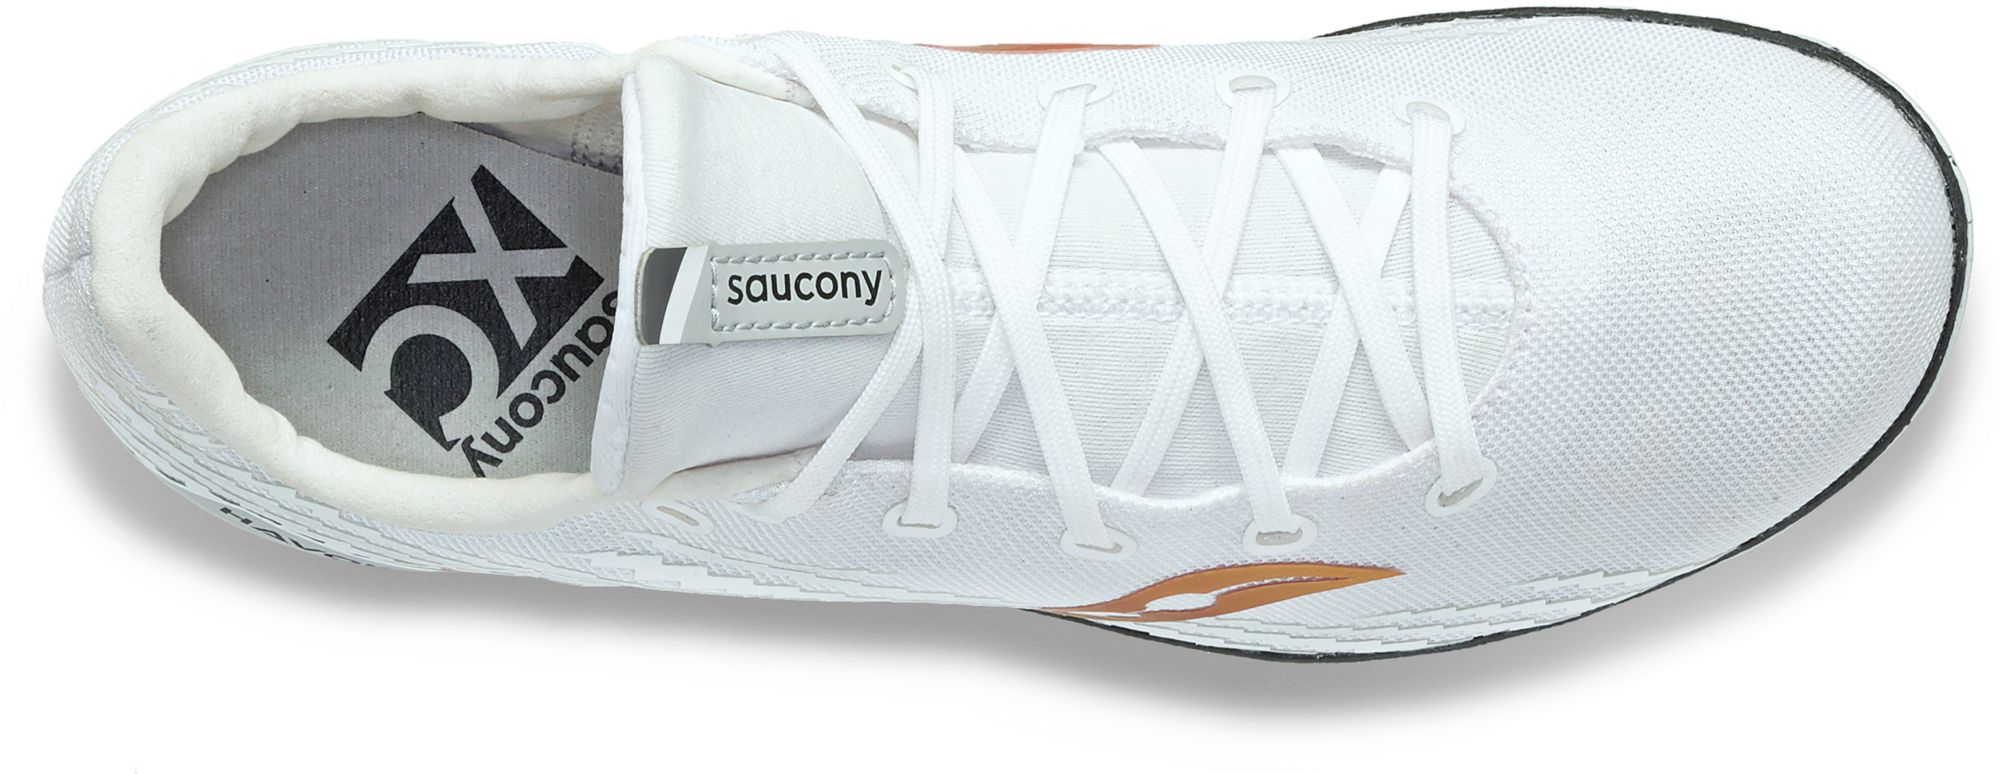 Saucony Men's Havok XC 3 Spike Cross Country Shoes